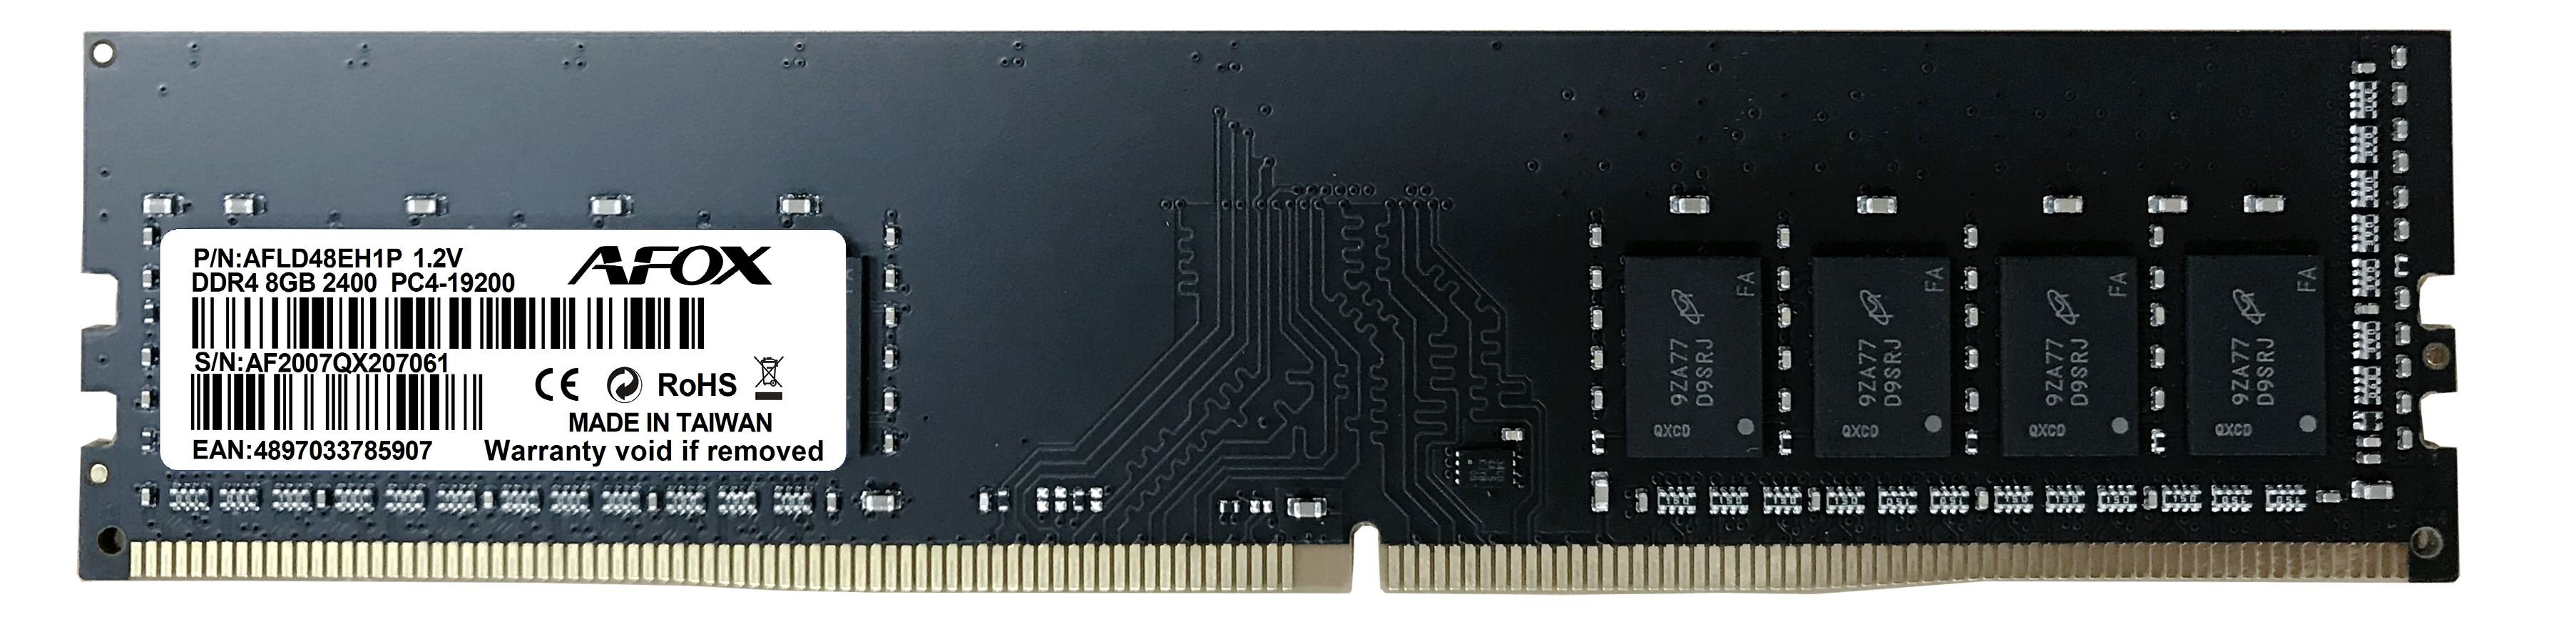 AFOX AFLD48EH1P 8GB 2400Mhz DDR4 MICRON CHIPS RAM